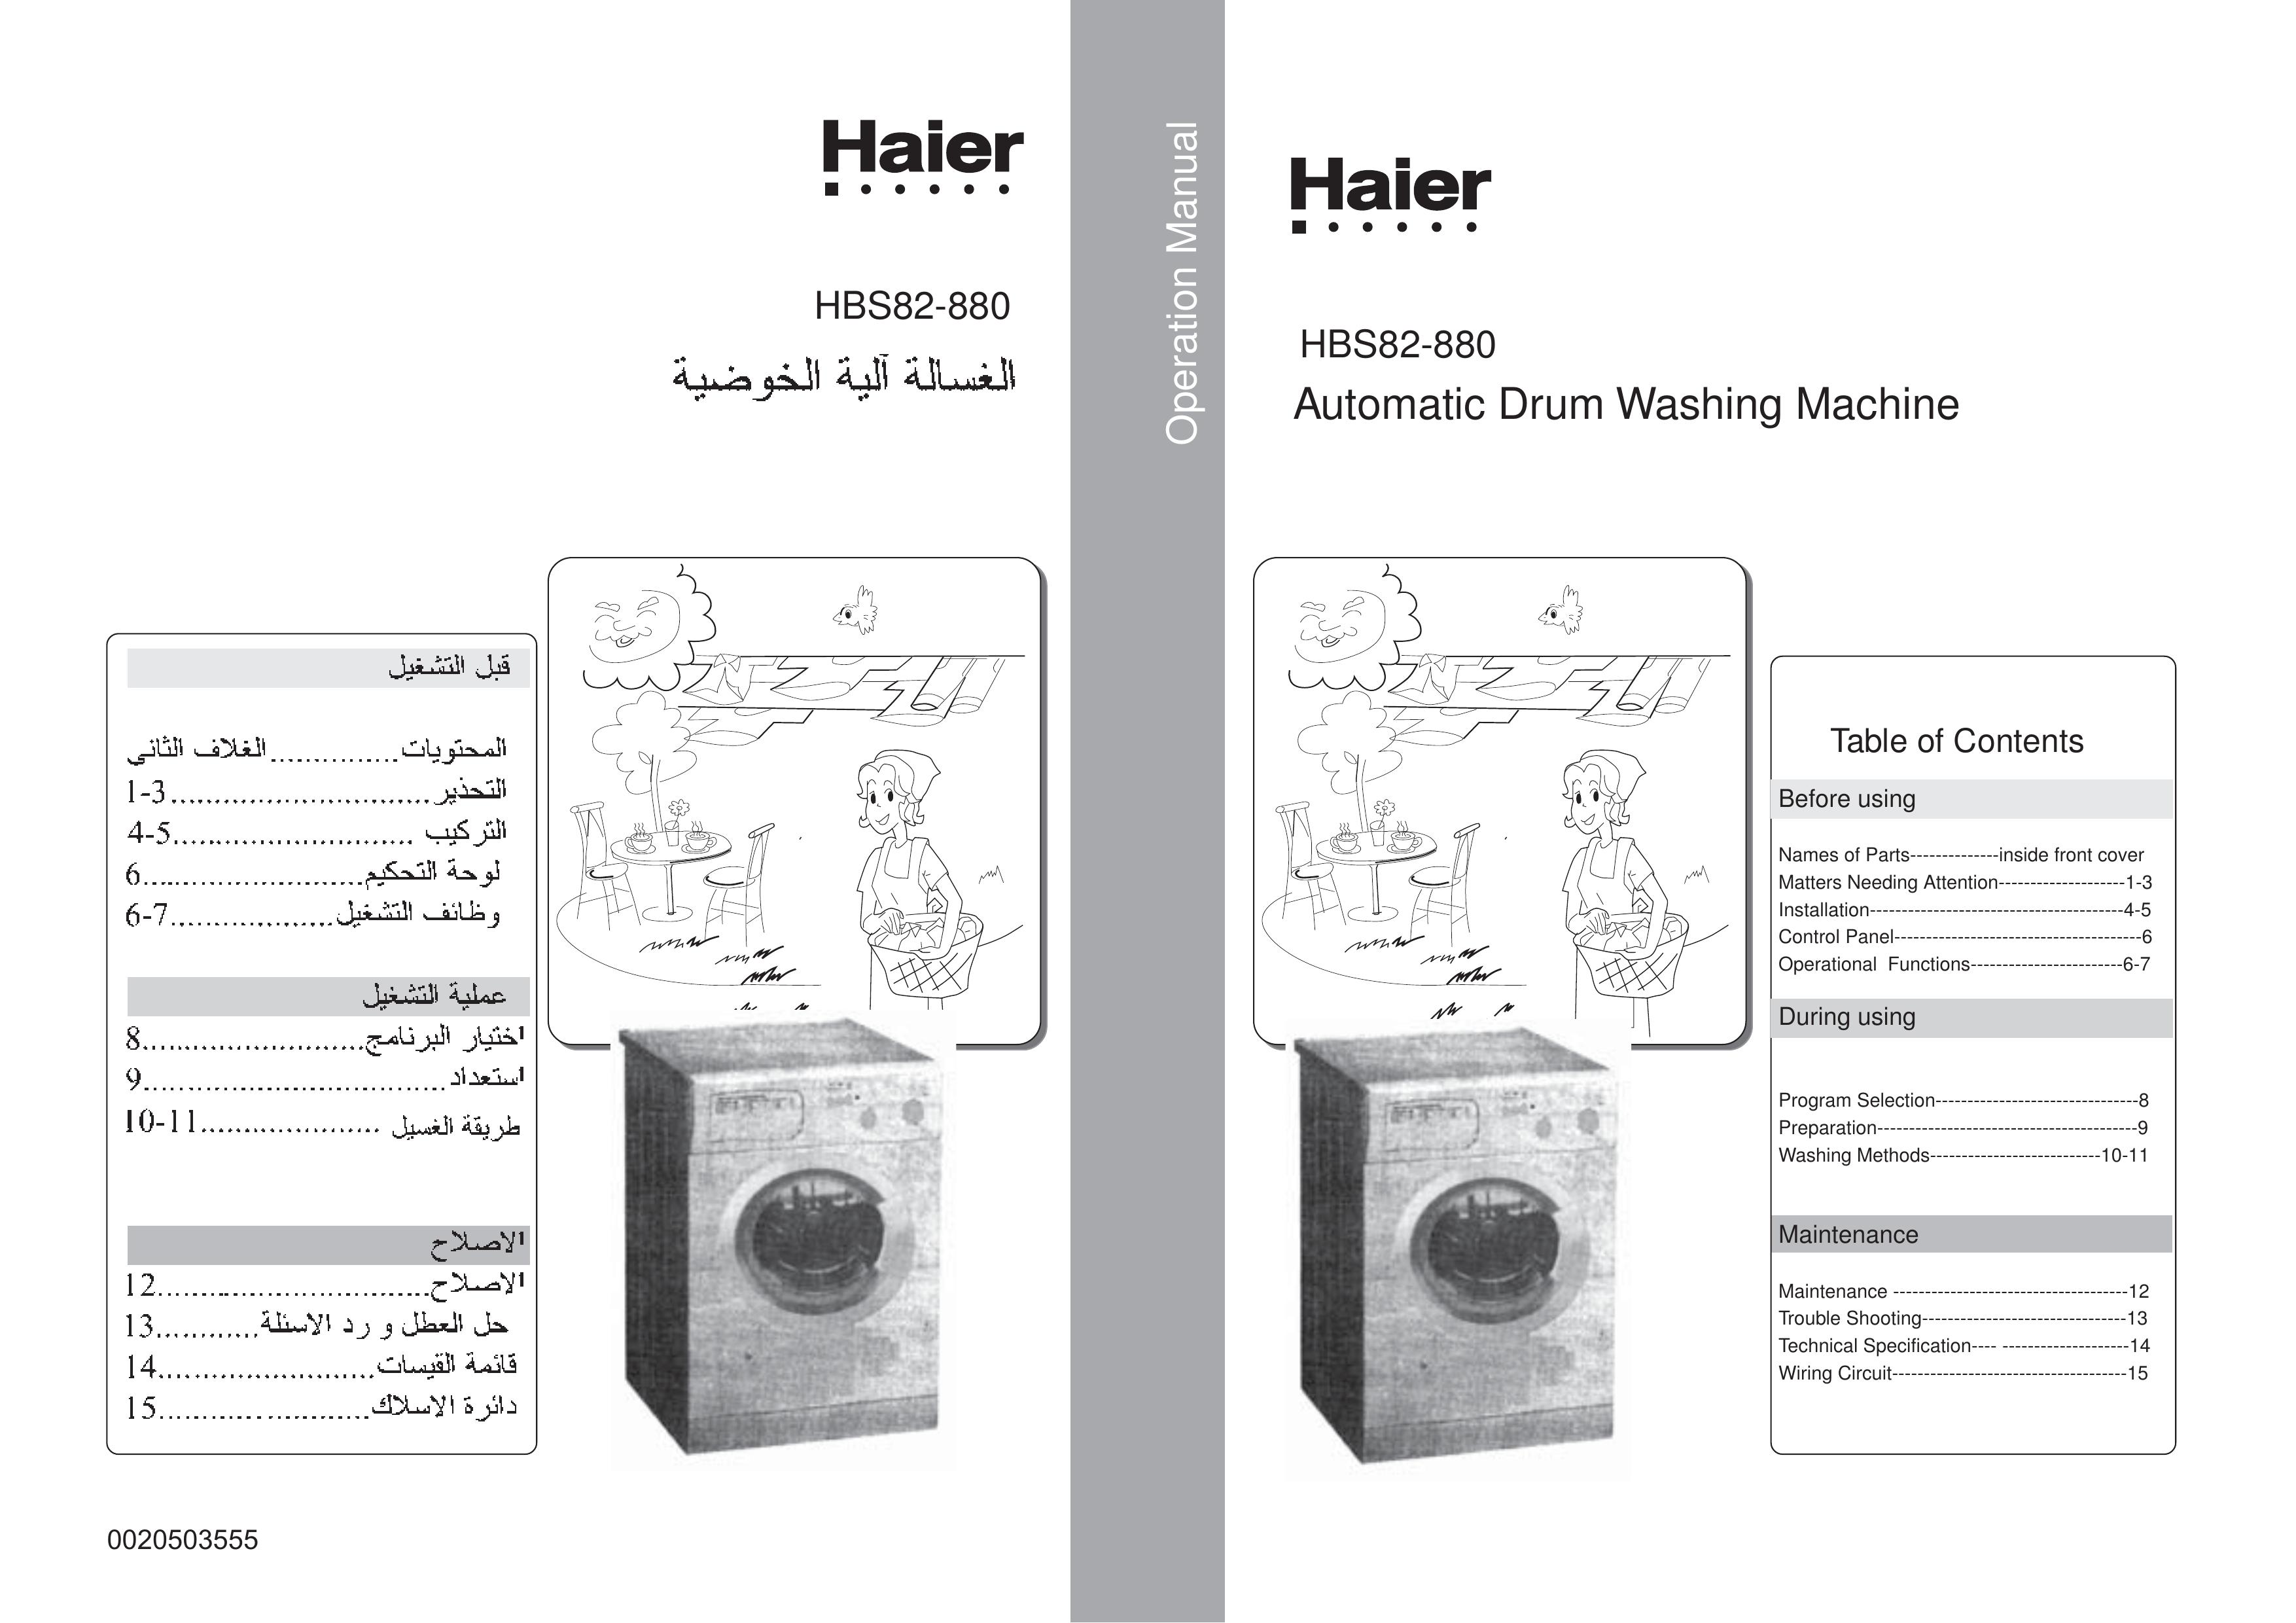 Haier HBS82-880 Washer User Manual